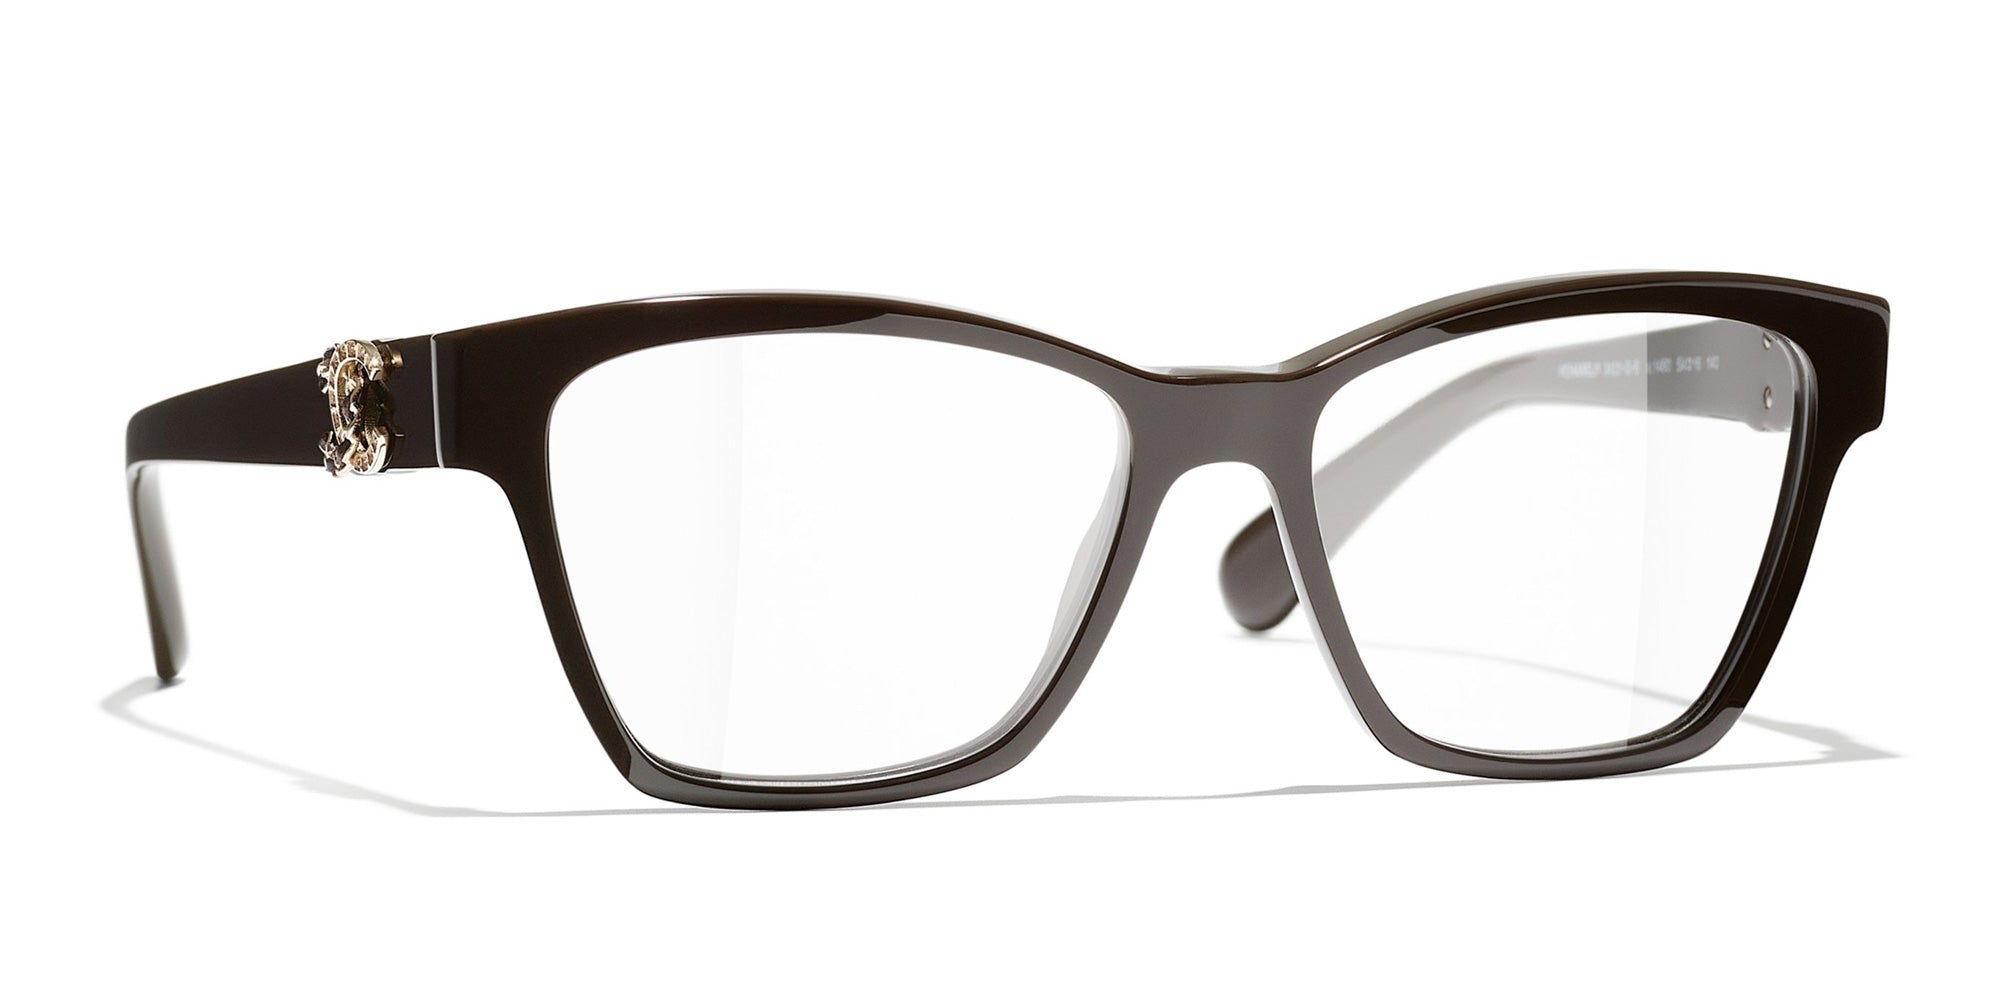 Fashionista Favorites – Chunky Cat Eye Glasses Edition